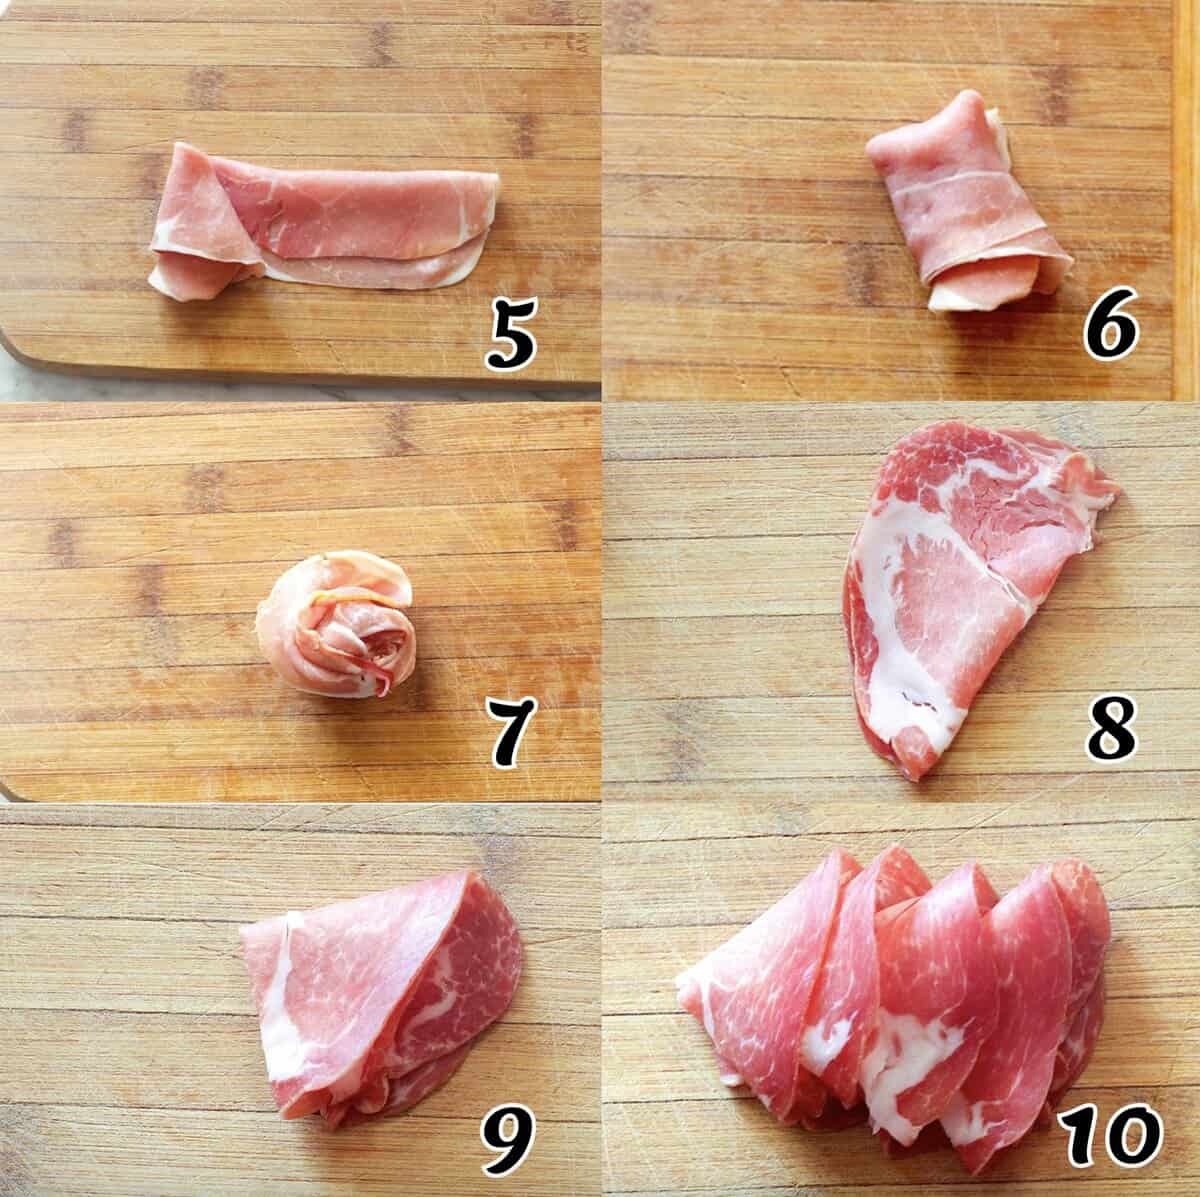 Continue folding your deli meats